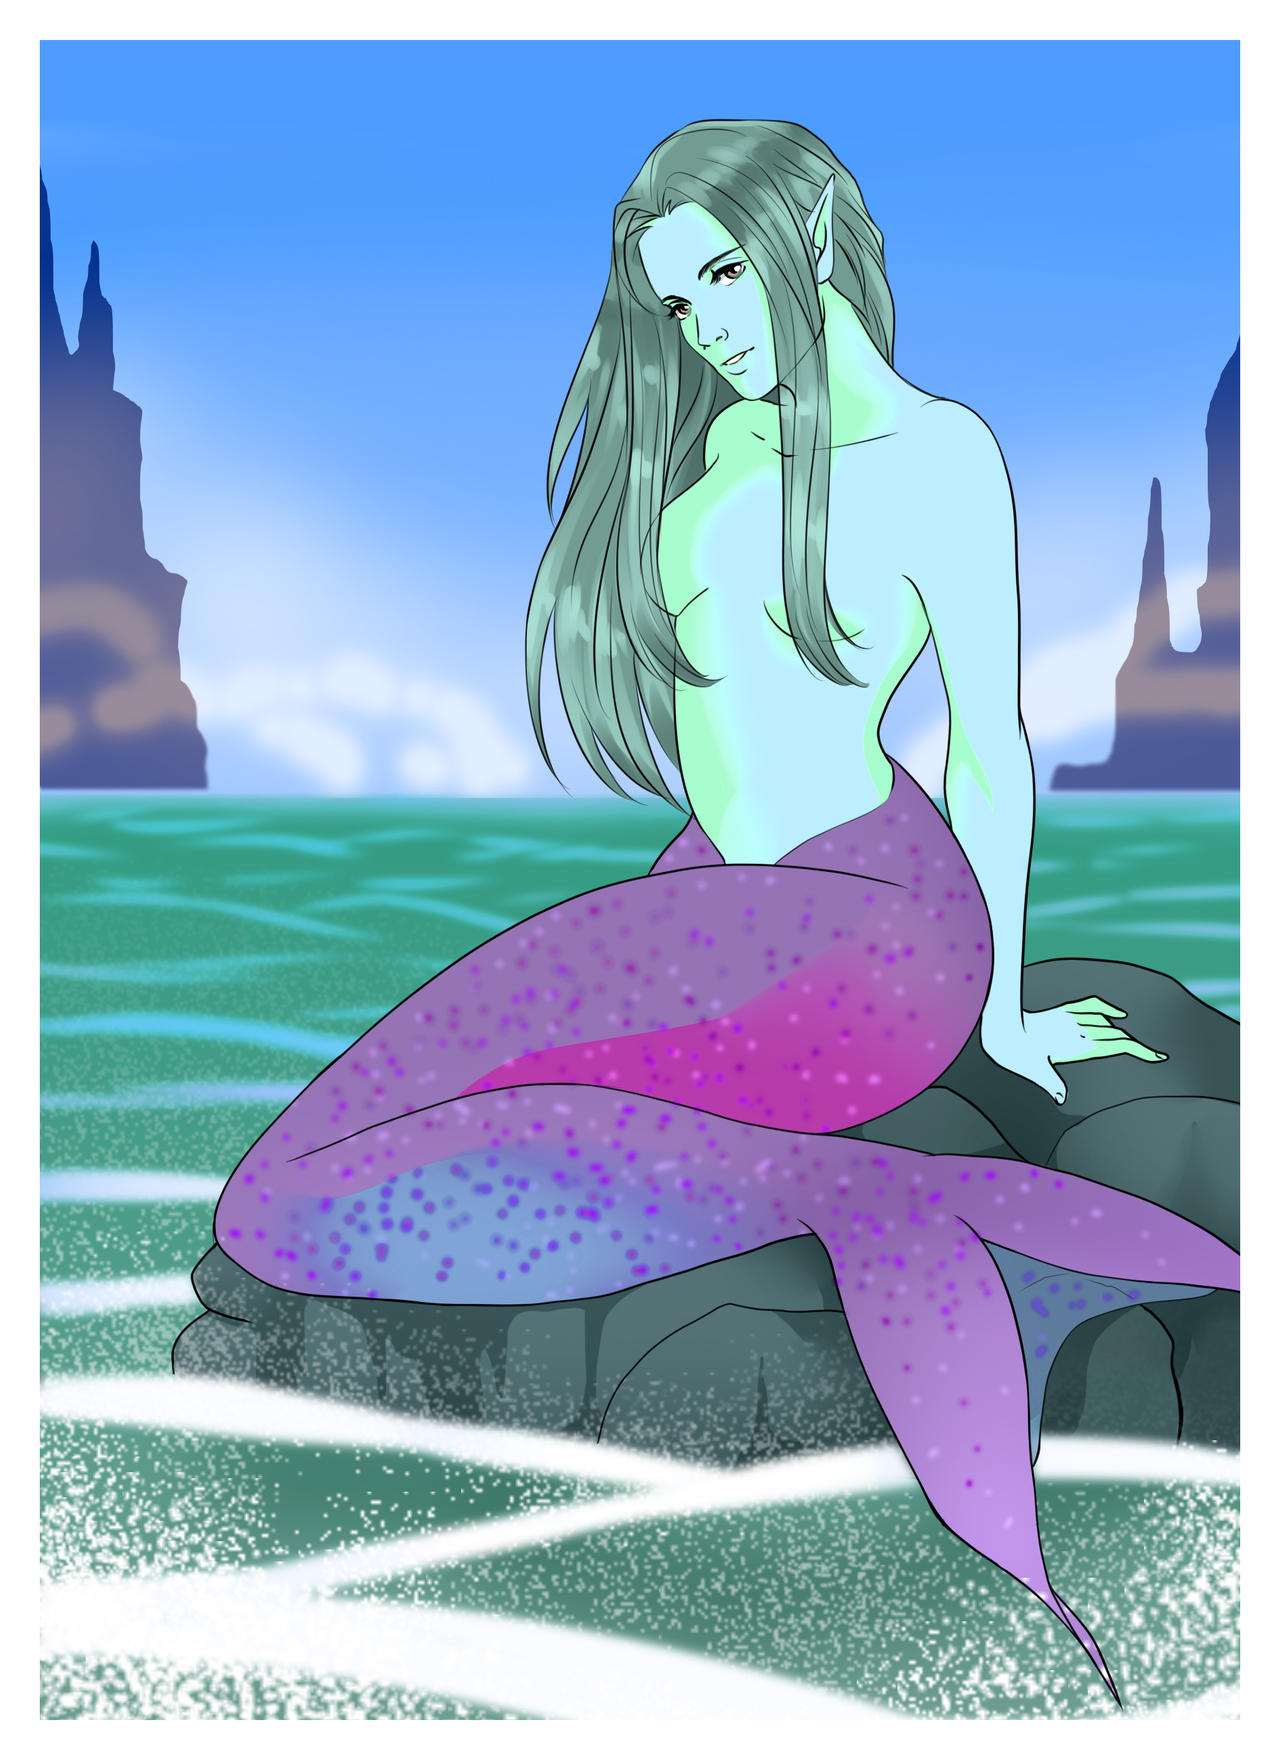 Mako Mermaids by sitishelma on DeviantArt